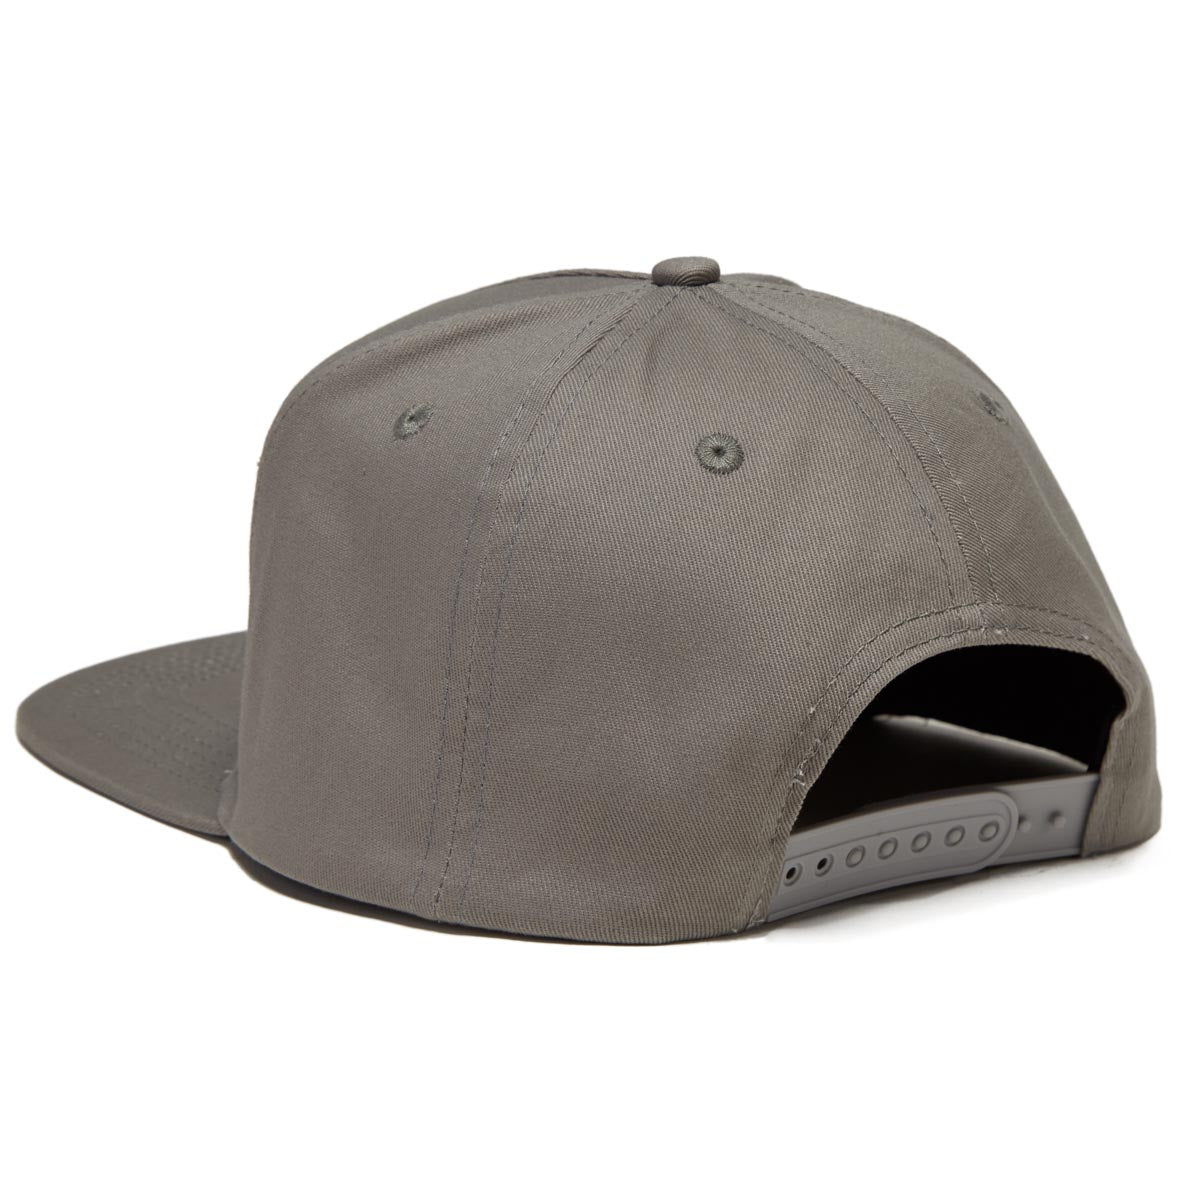 Santa Cruz Classic Snapback Mid Profile Hat - Grey image 2